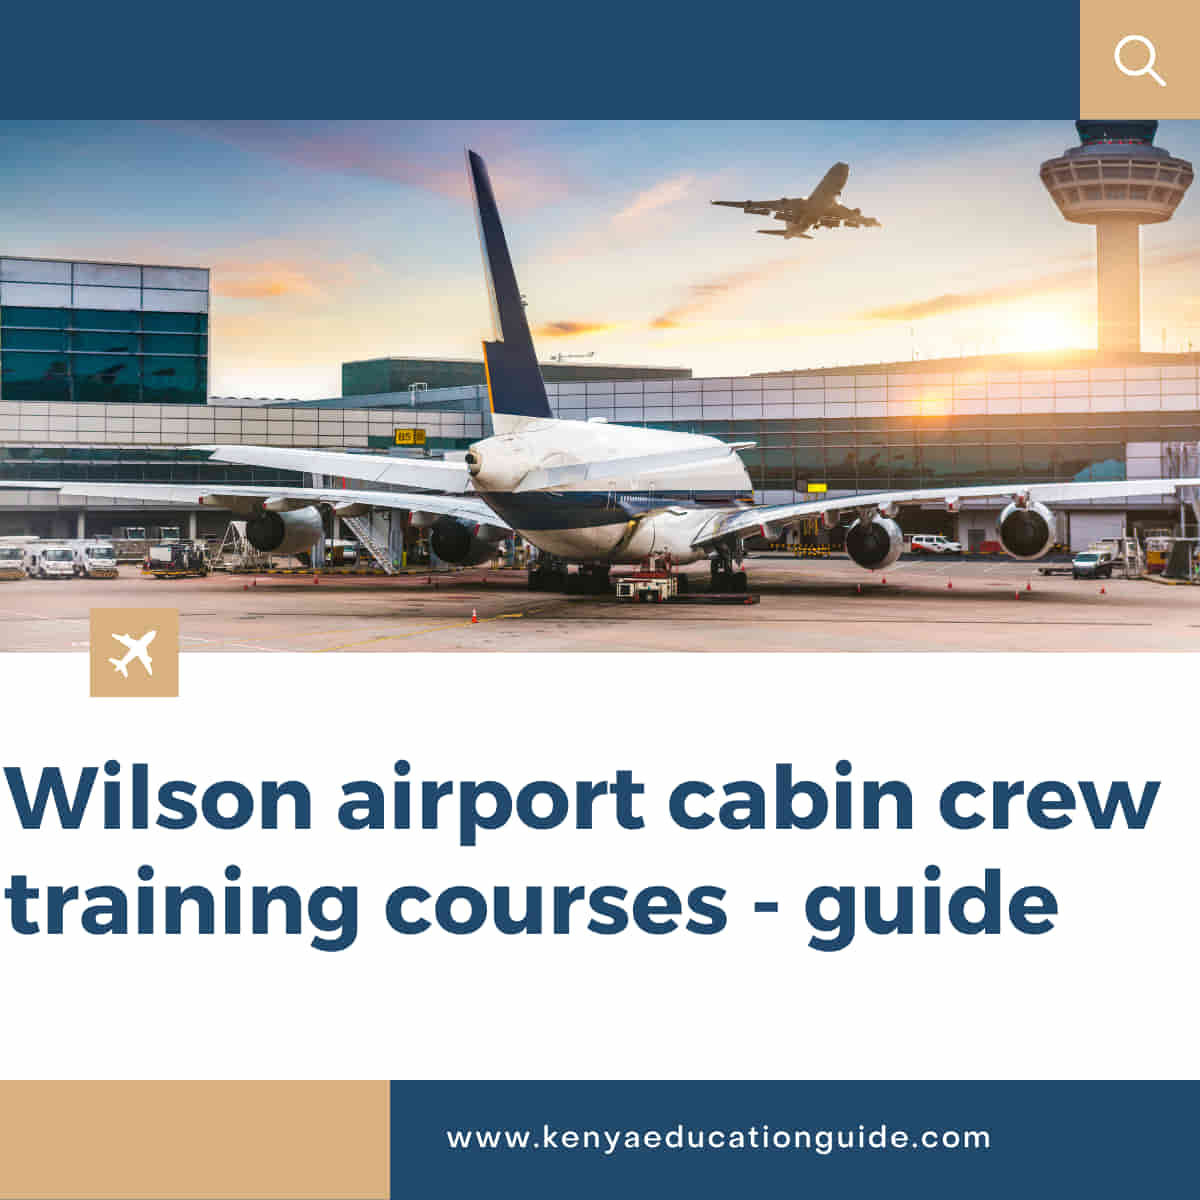 Wilson airport cabin crew training